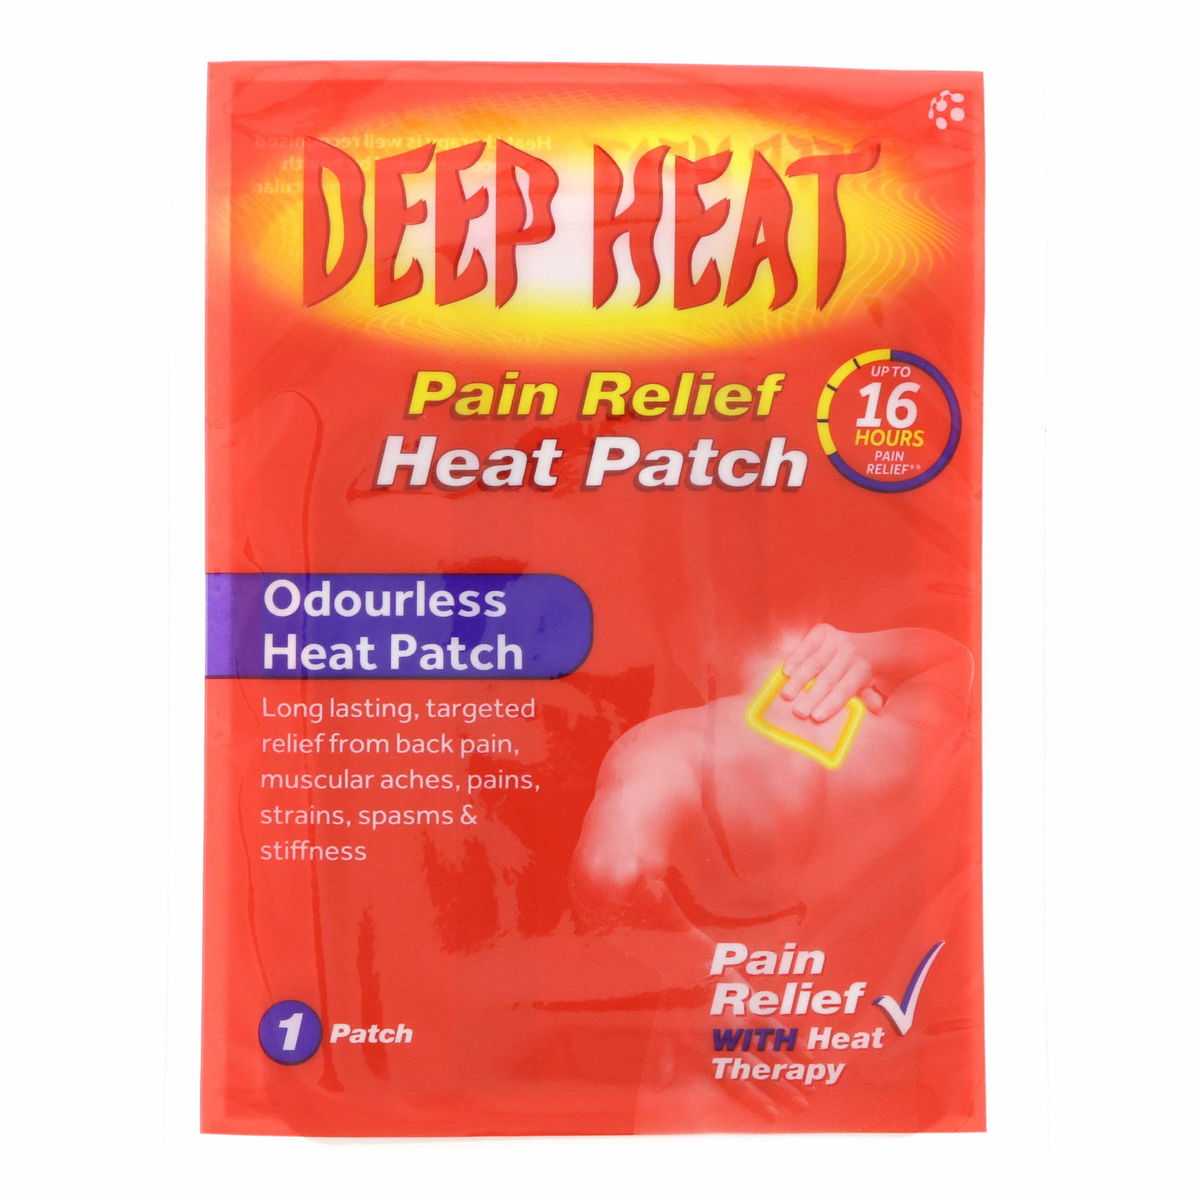 Deep Heat Pain  Heat Patch 1Patch